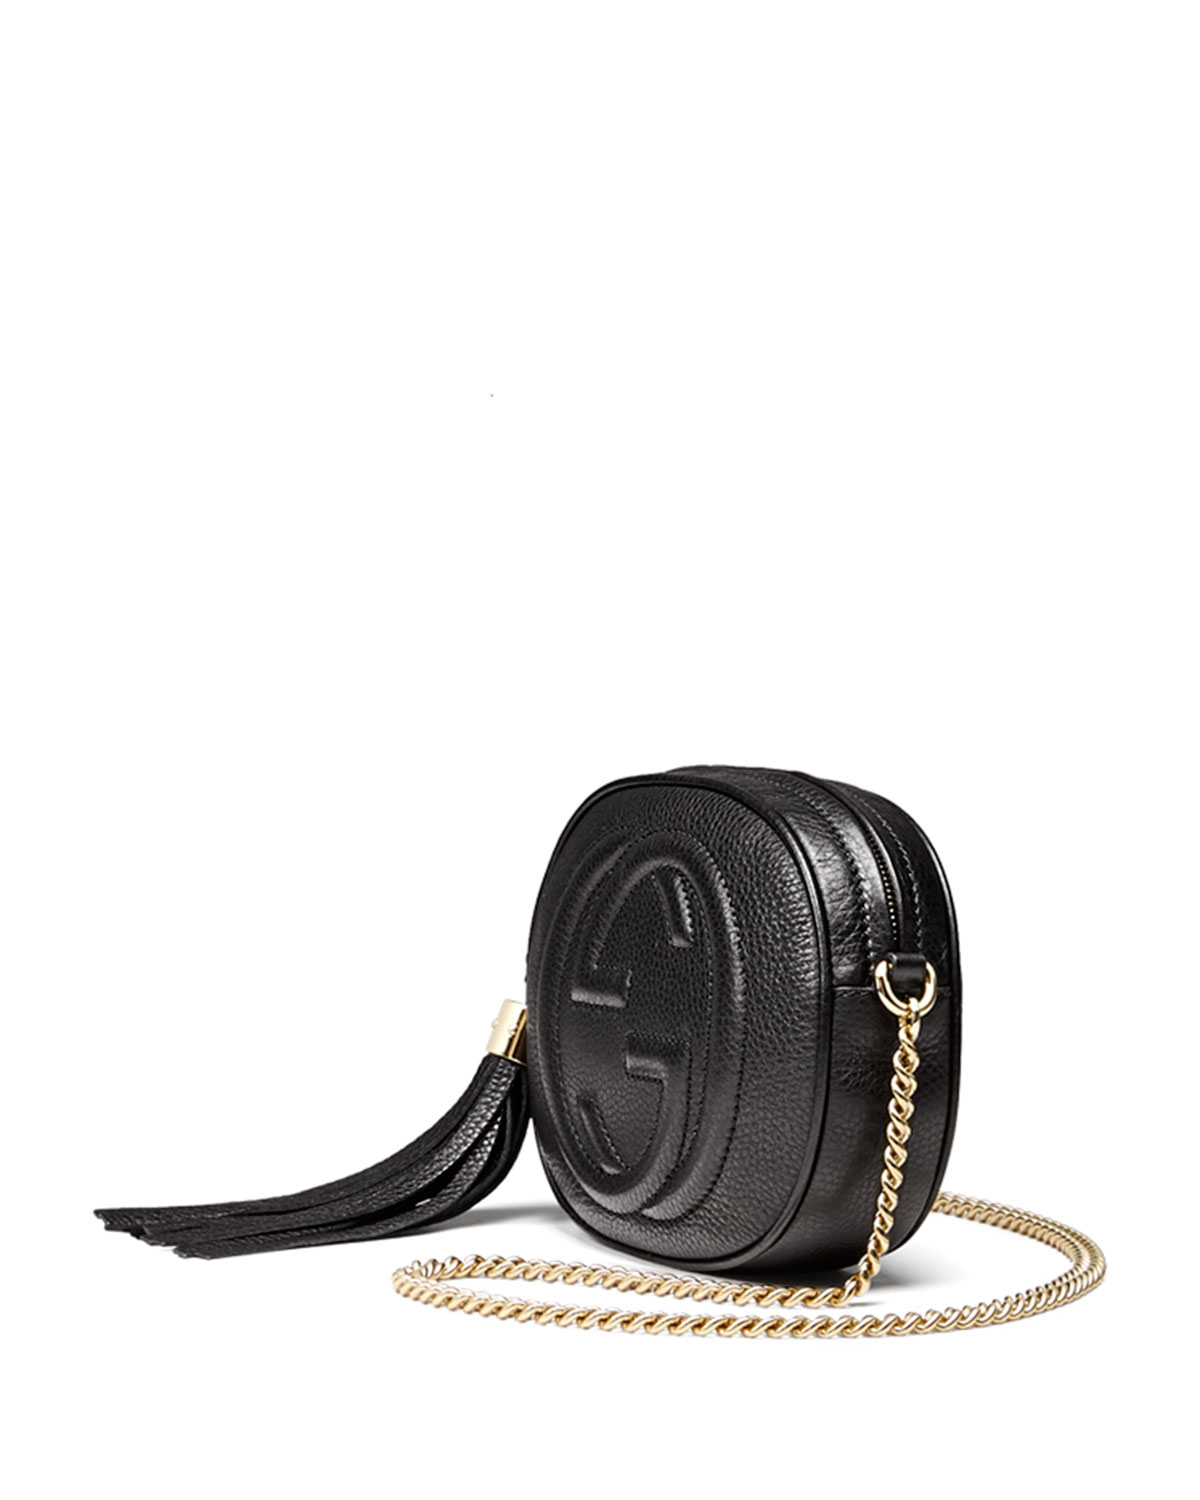 Gucci Soho Leather Mini Chain Bag in Black - Lyst